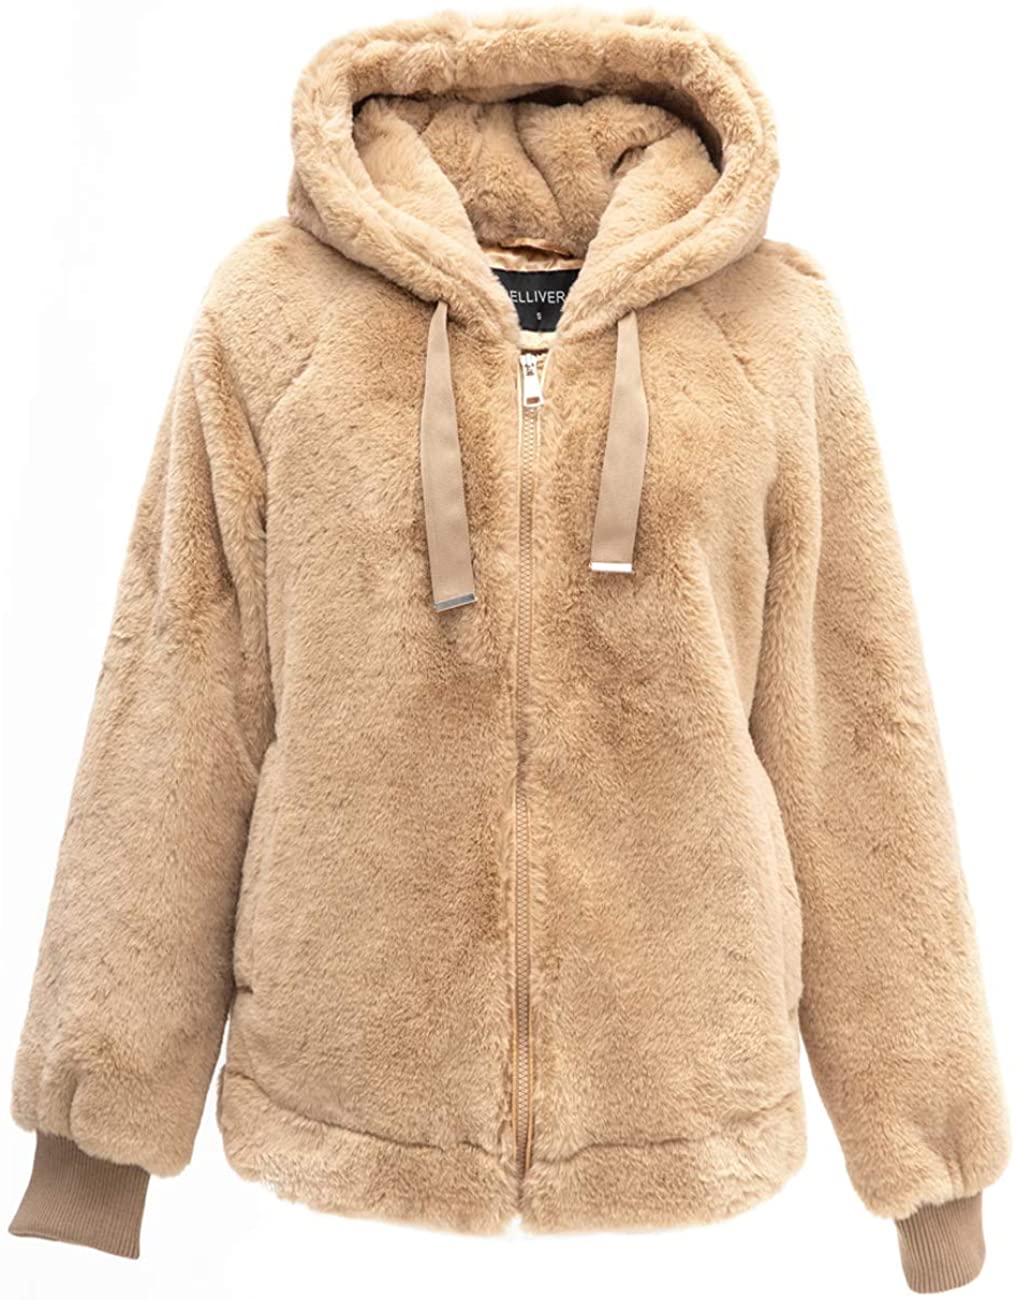 The Sherpa Shearling Fuzzy Jacket with Hood Fall and Winter Fashion 2021 Bellivera Women's Faux Fur Fleece Coat